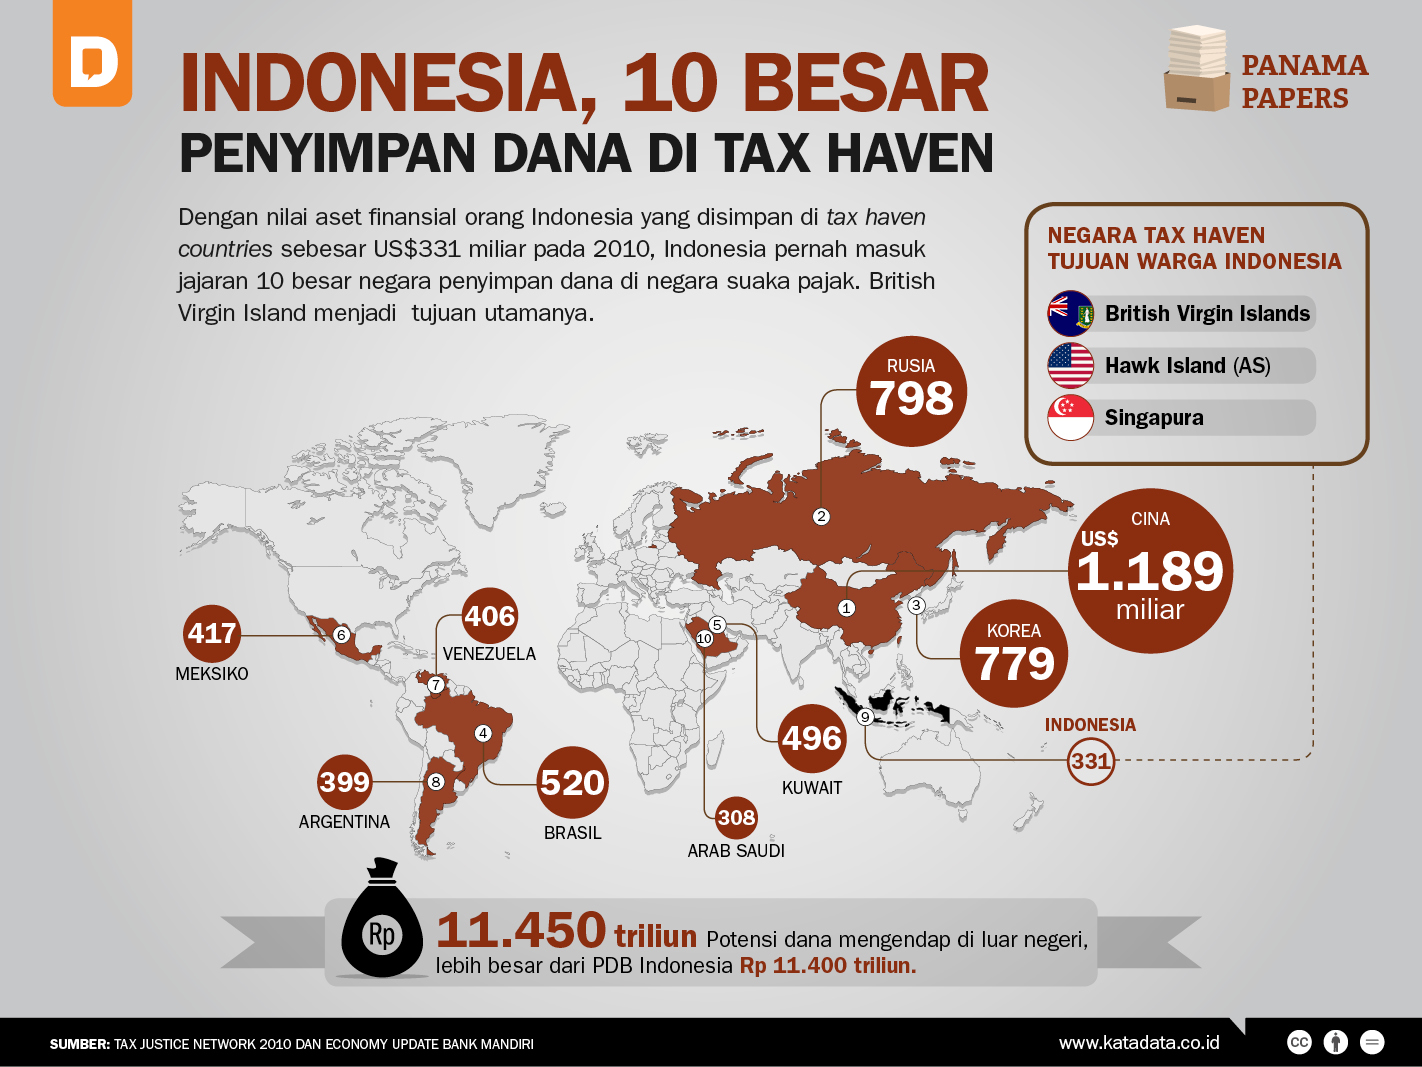 Indonesia, 10 Negara Penyimpan Dana di Tax Haven